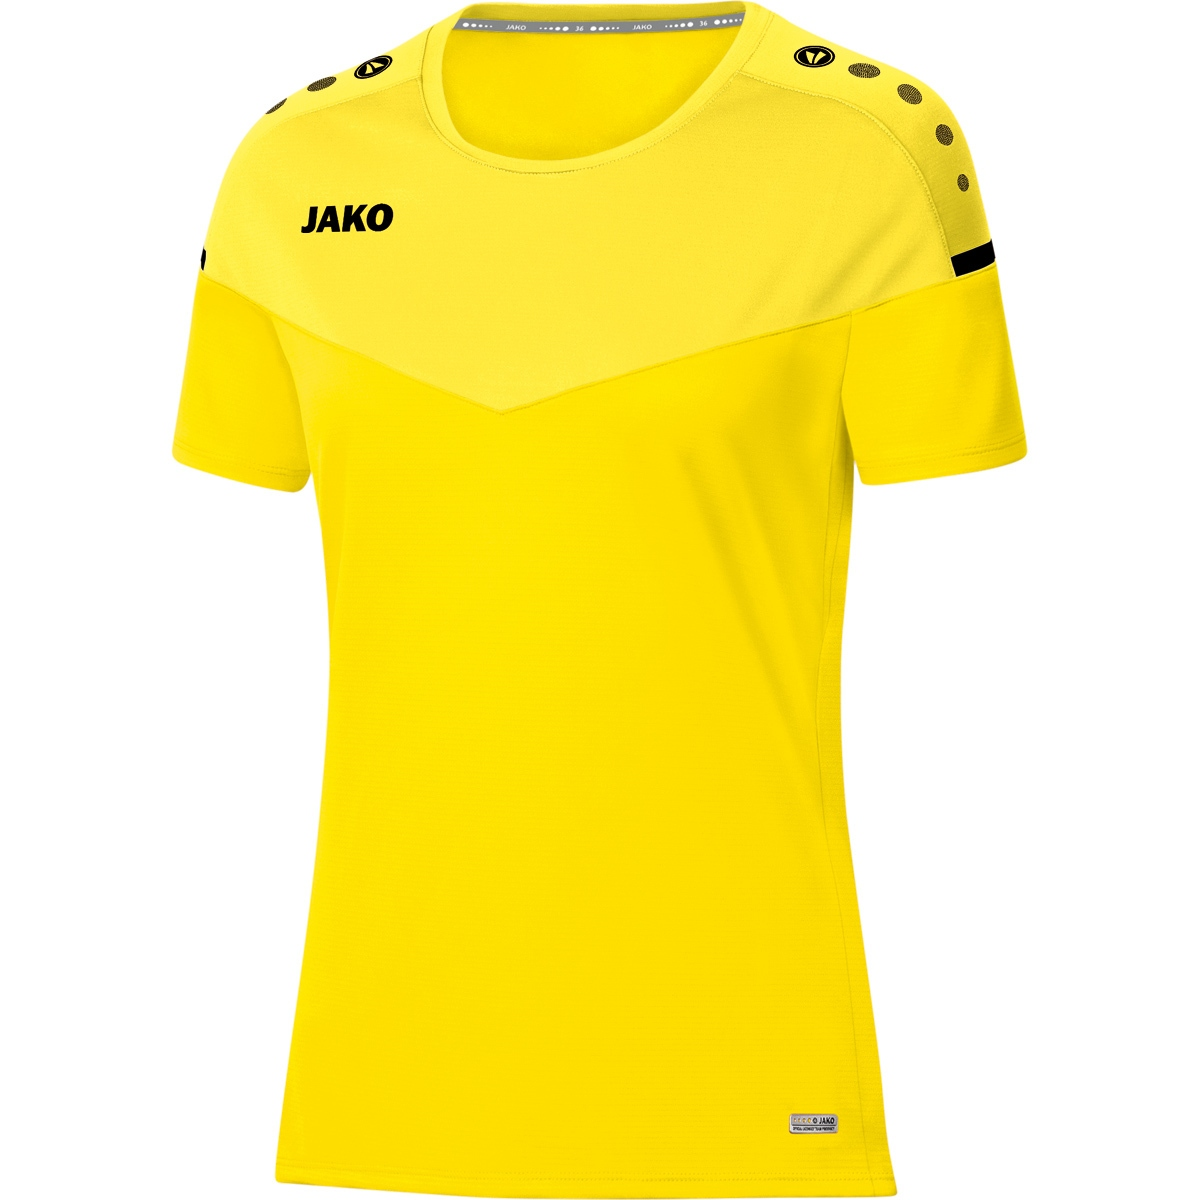 JAKO T-Shirt Champ 2.0 citro/citro Damen, 6120 Gr. 40, light